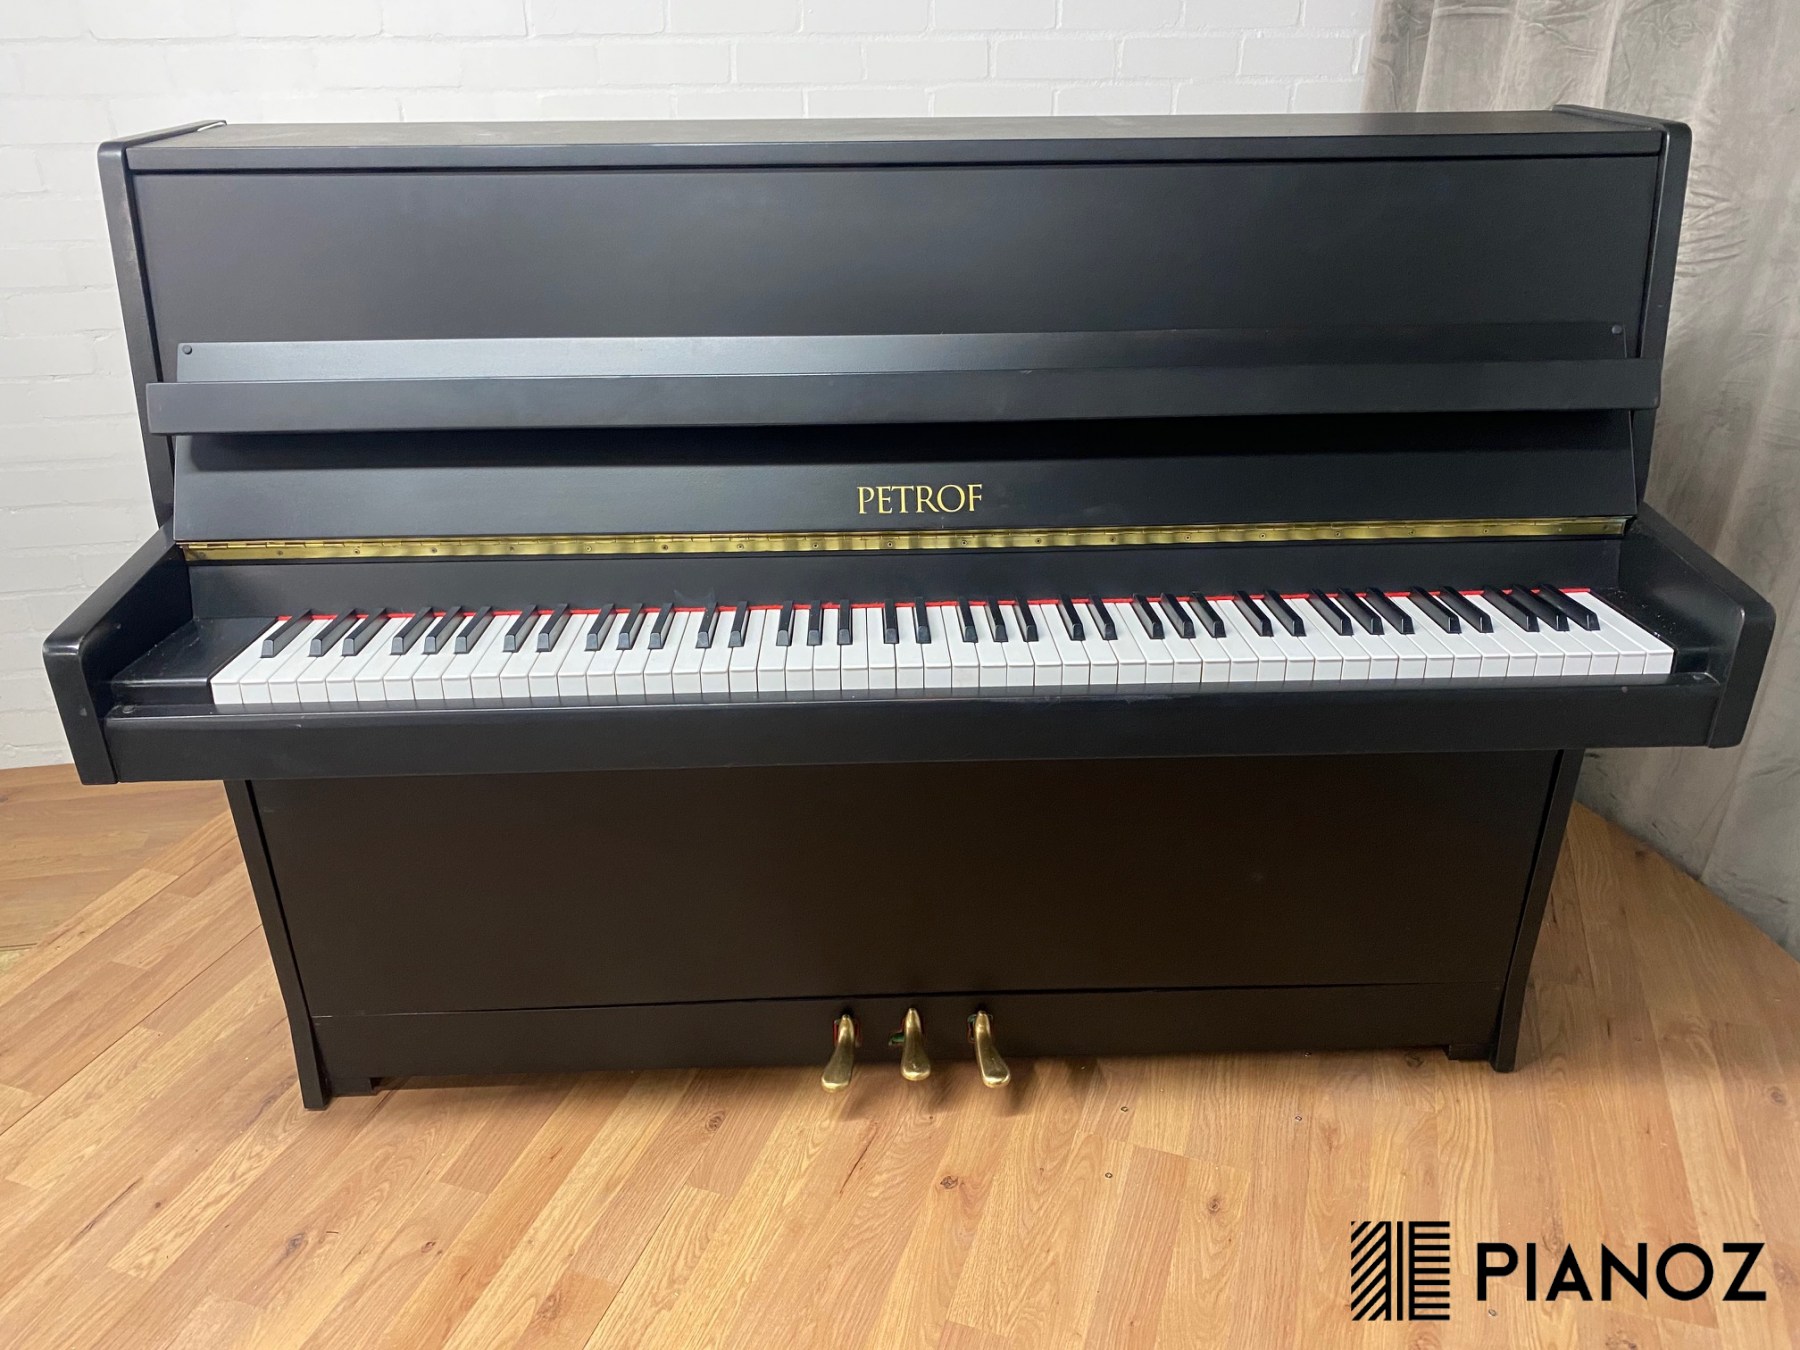 Petrof  Model 100 Sonatina Upright Piano piano for sale in UK